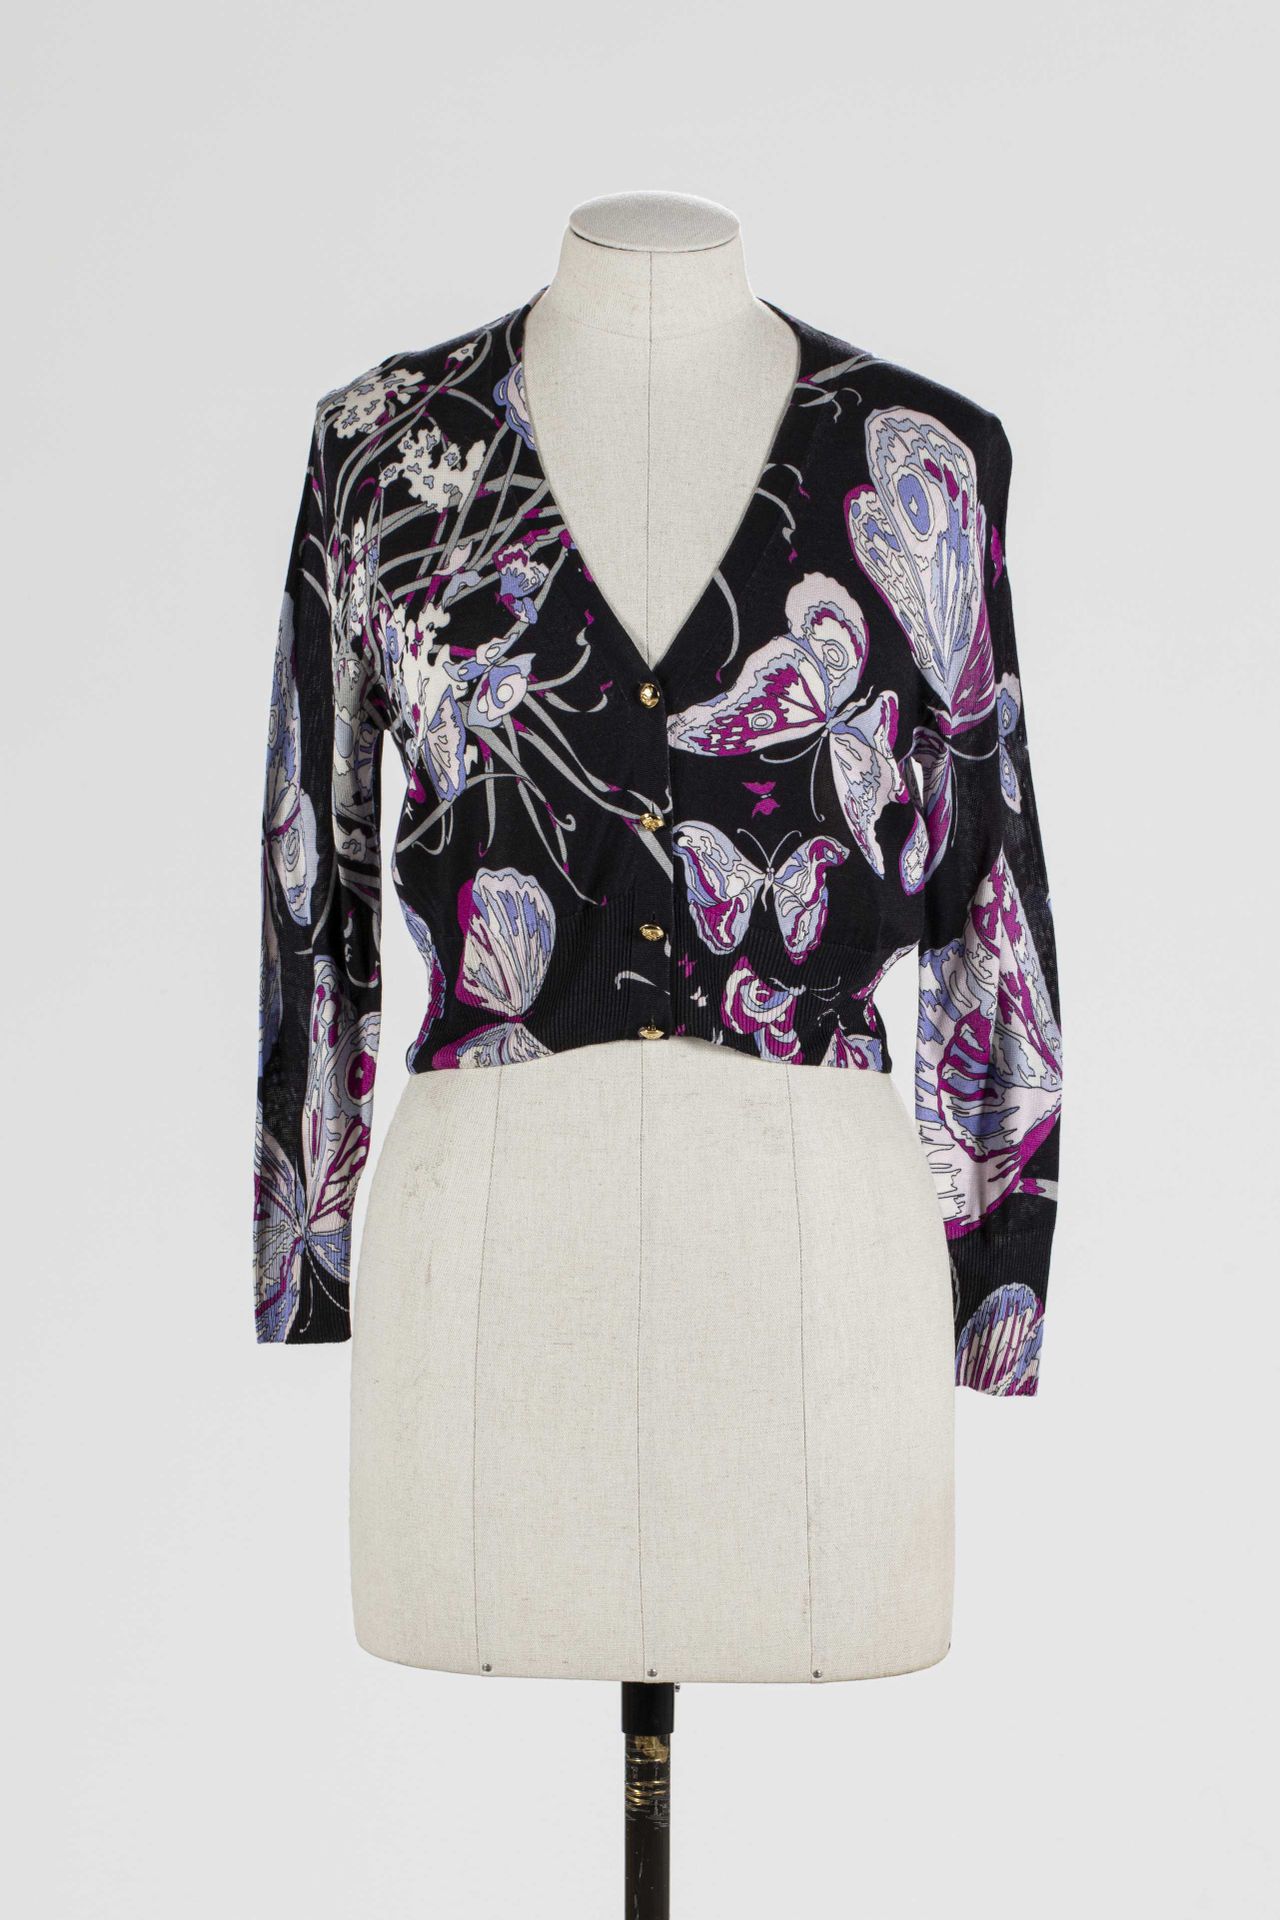 Null EMILIO PUCCI：黑色短款丝绸马甲，有花卉和蝴蝶装饰，长袖，单排扣。

T.S